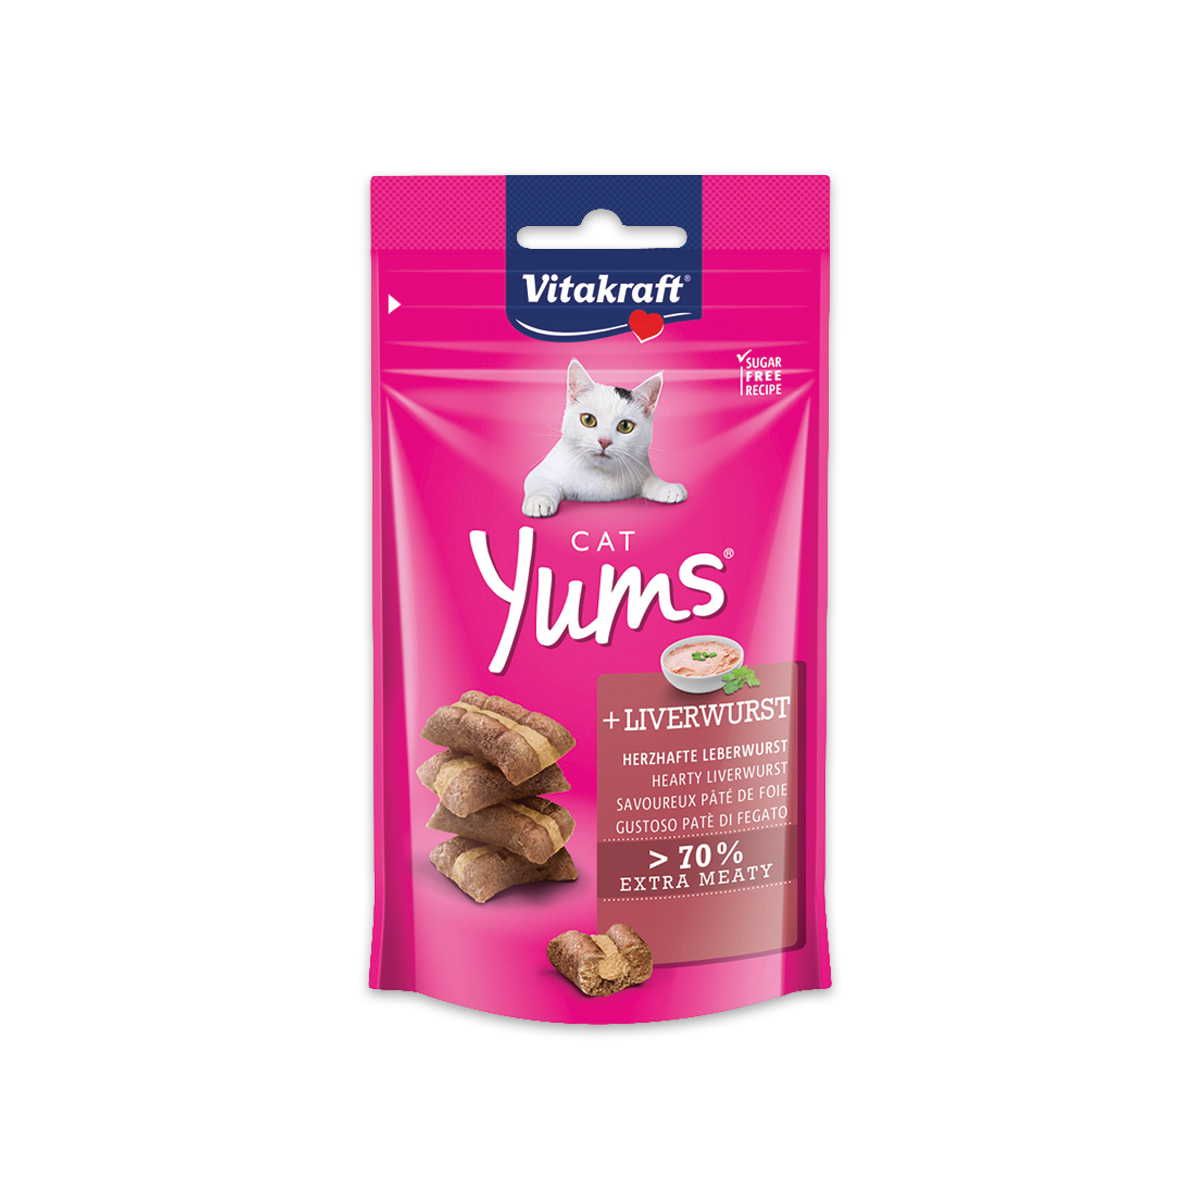 Vitakraft Yums Cat Liverwurst ไวต้าคราฟ แคท ยัมส์ ขนมพ็อกเก็ตรสตับ ขนาด 40 กรัม